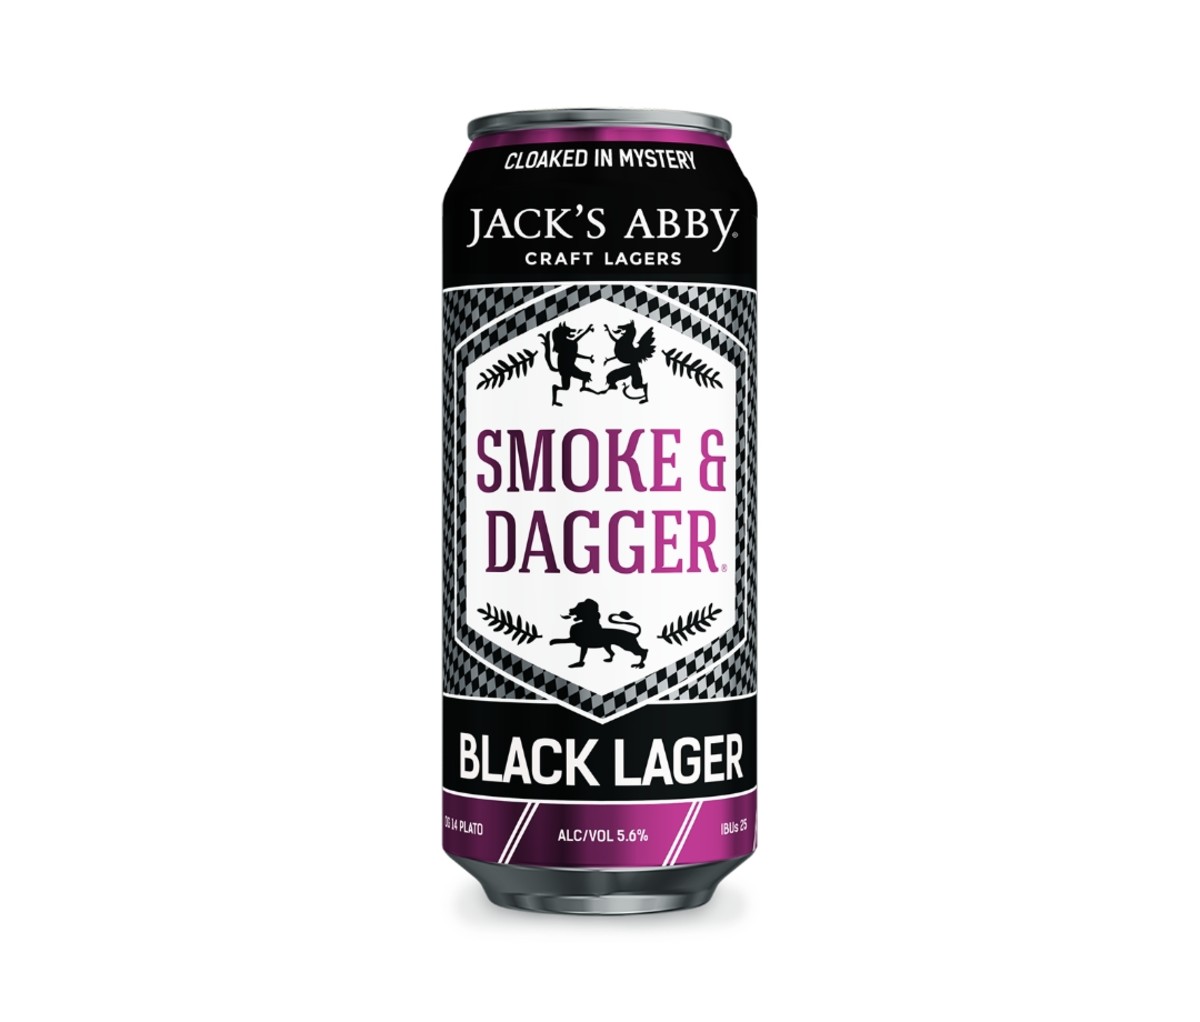 Jack’s Abby Smoke & Dagger fall beers